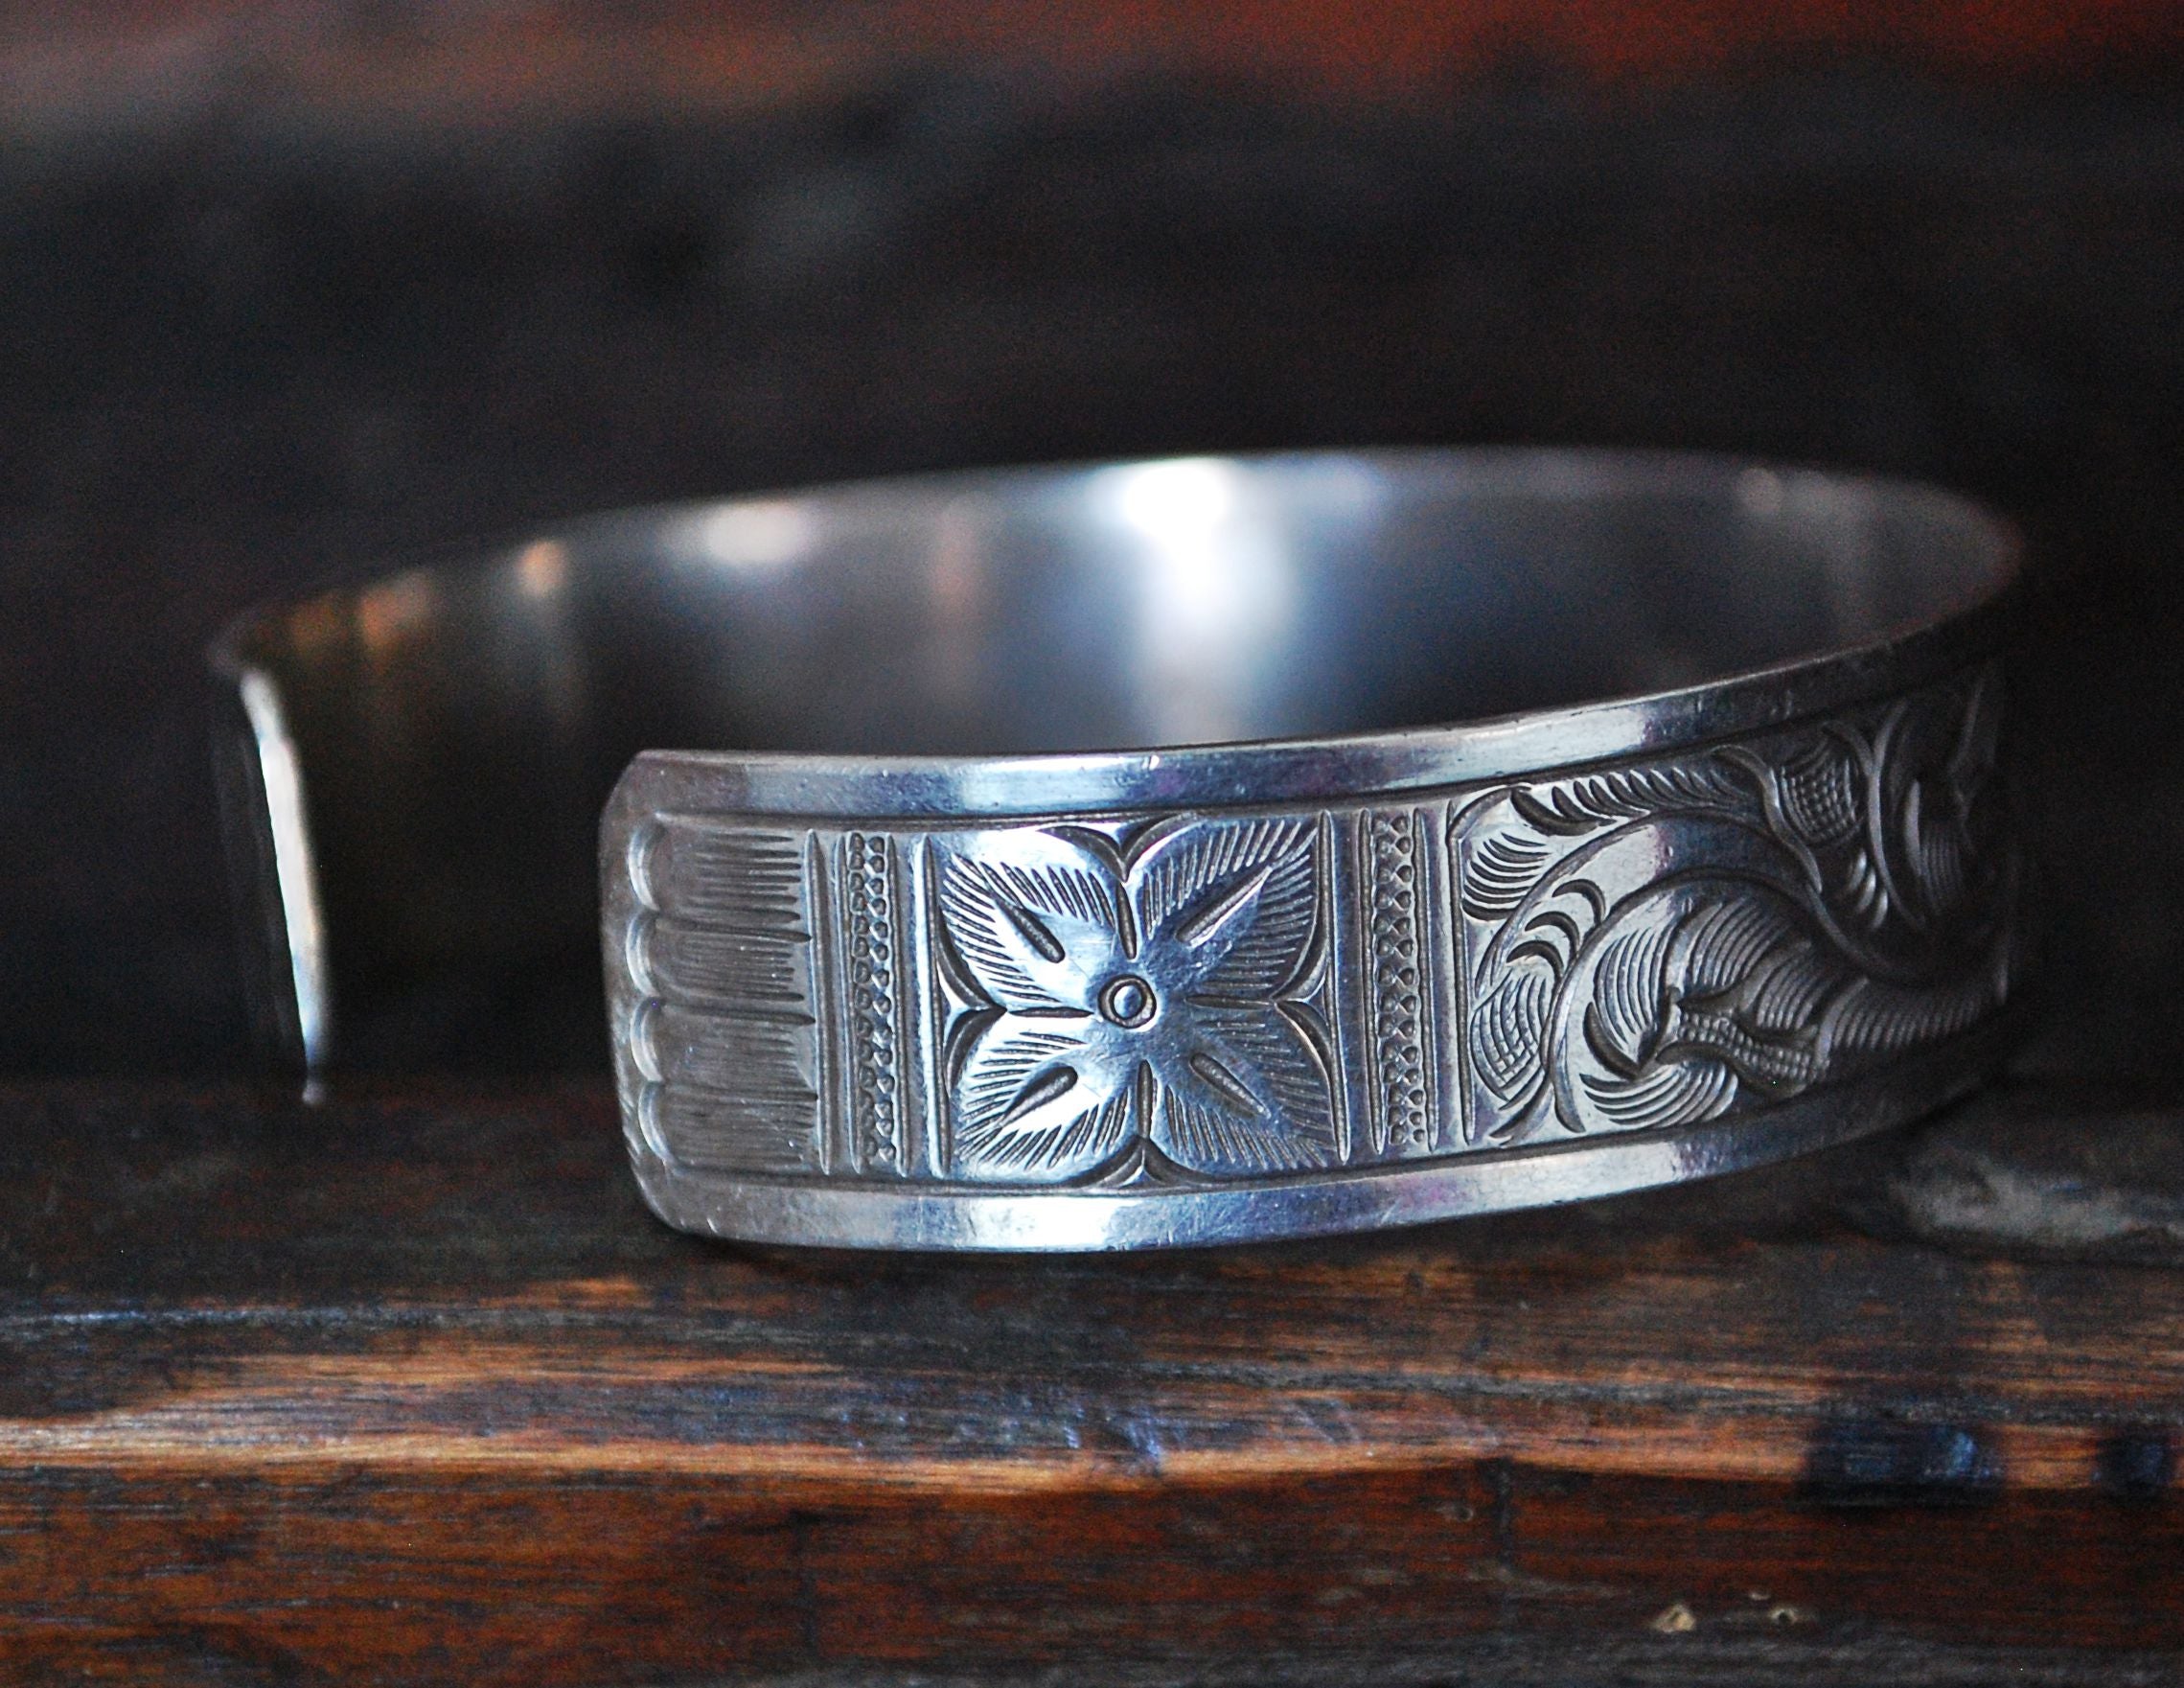 Hill Tribe Engraved Silver Bracelet